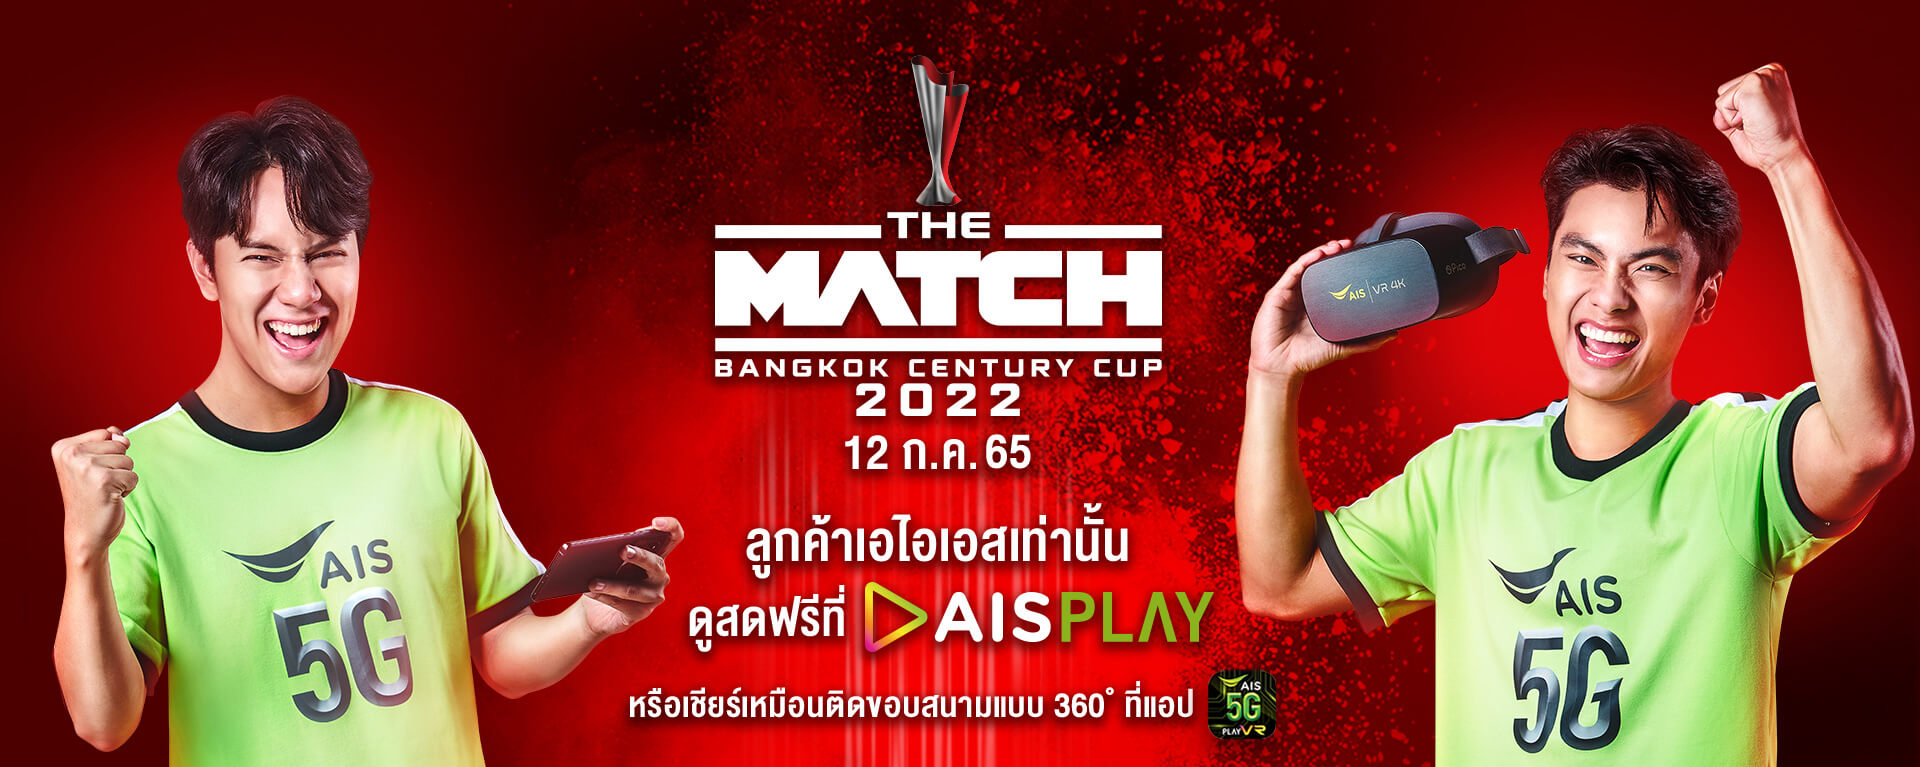 The Match Bangkok Century Cub 2022